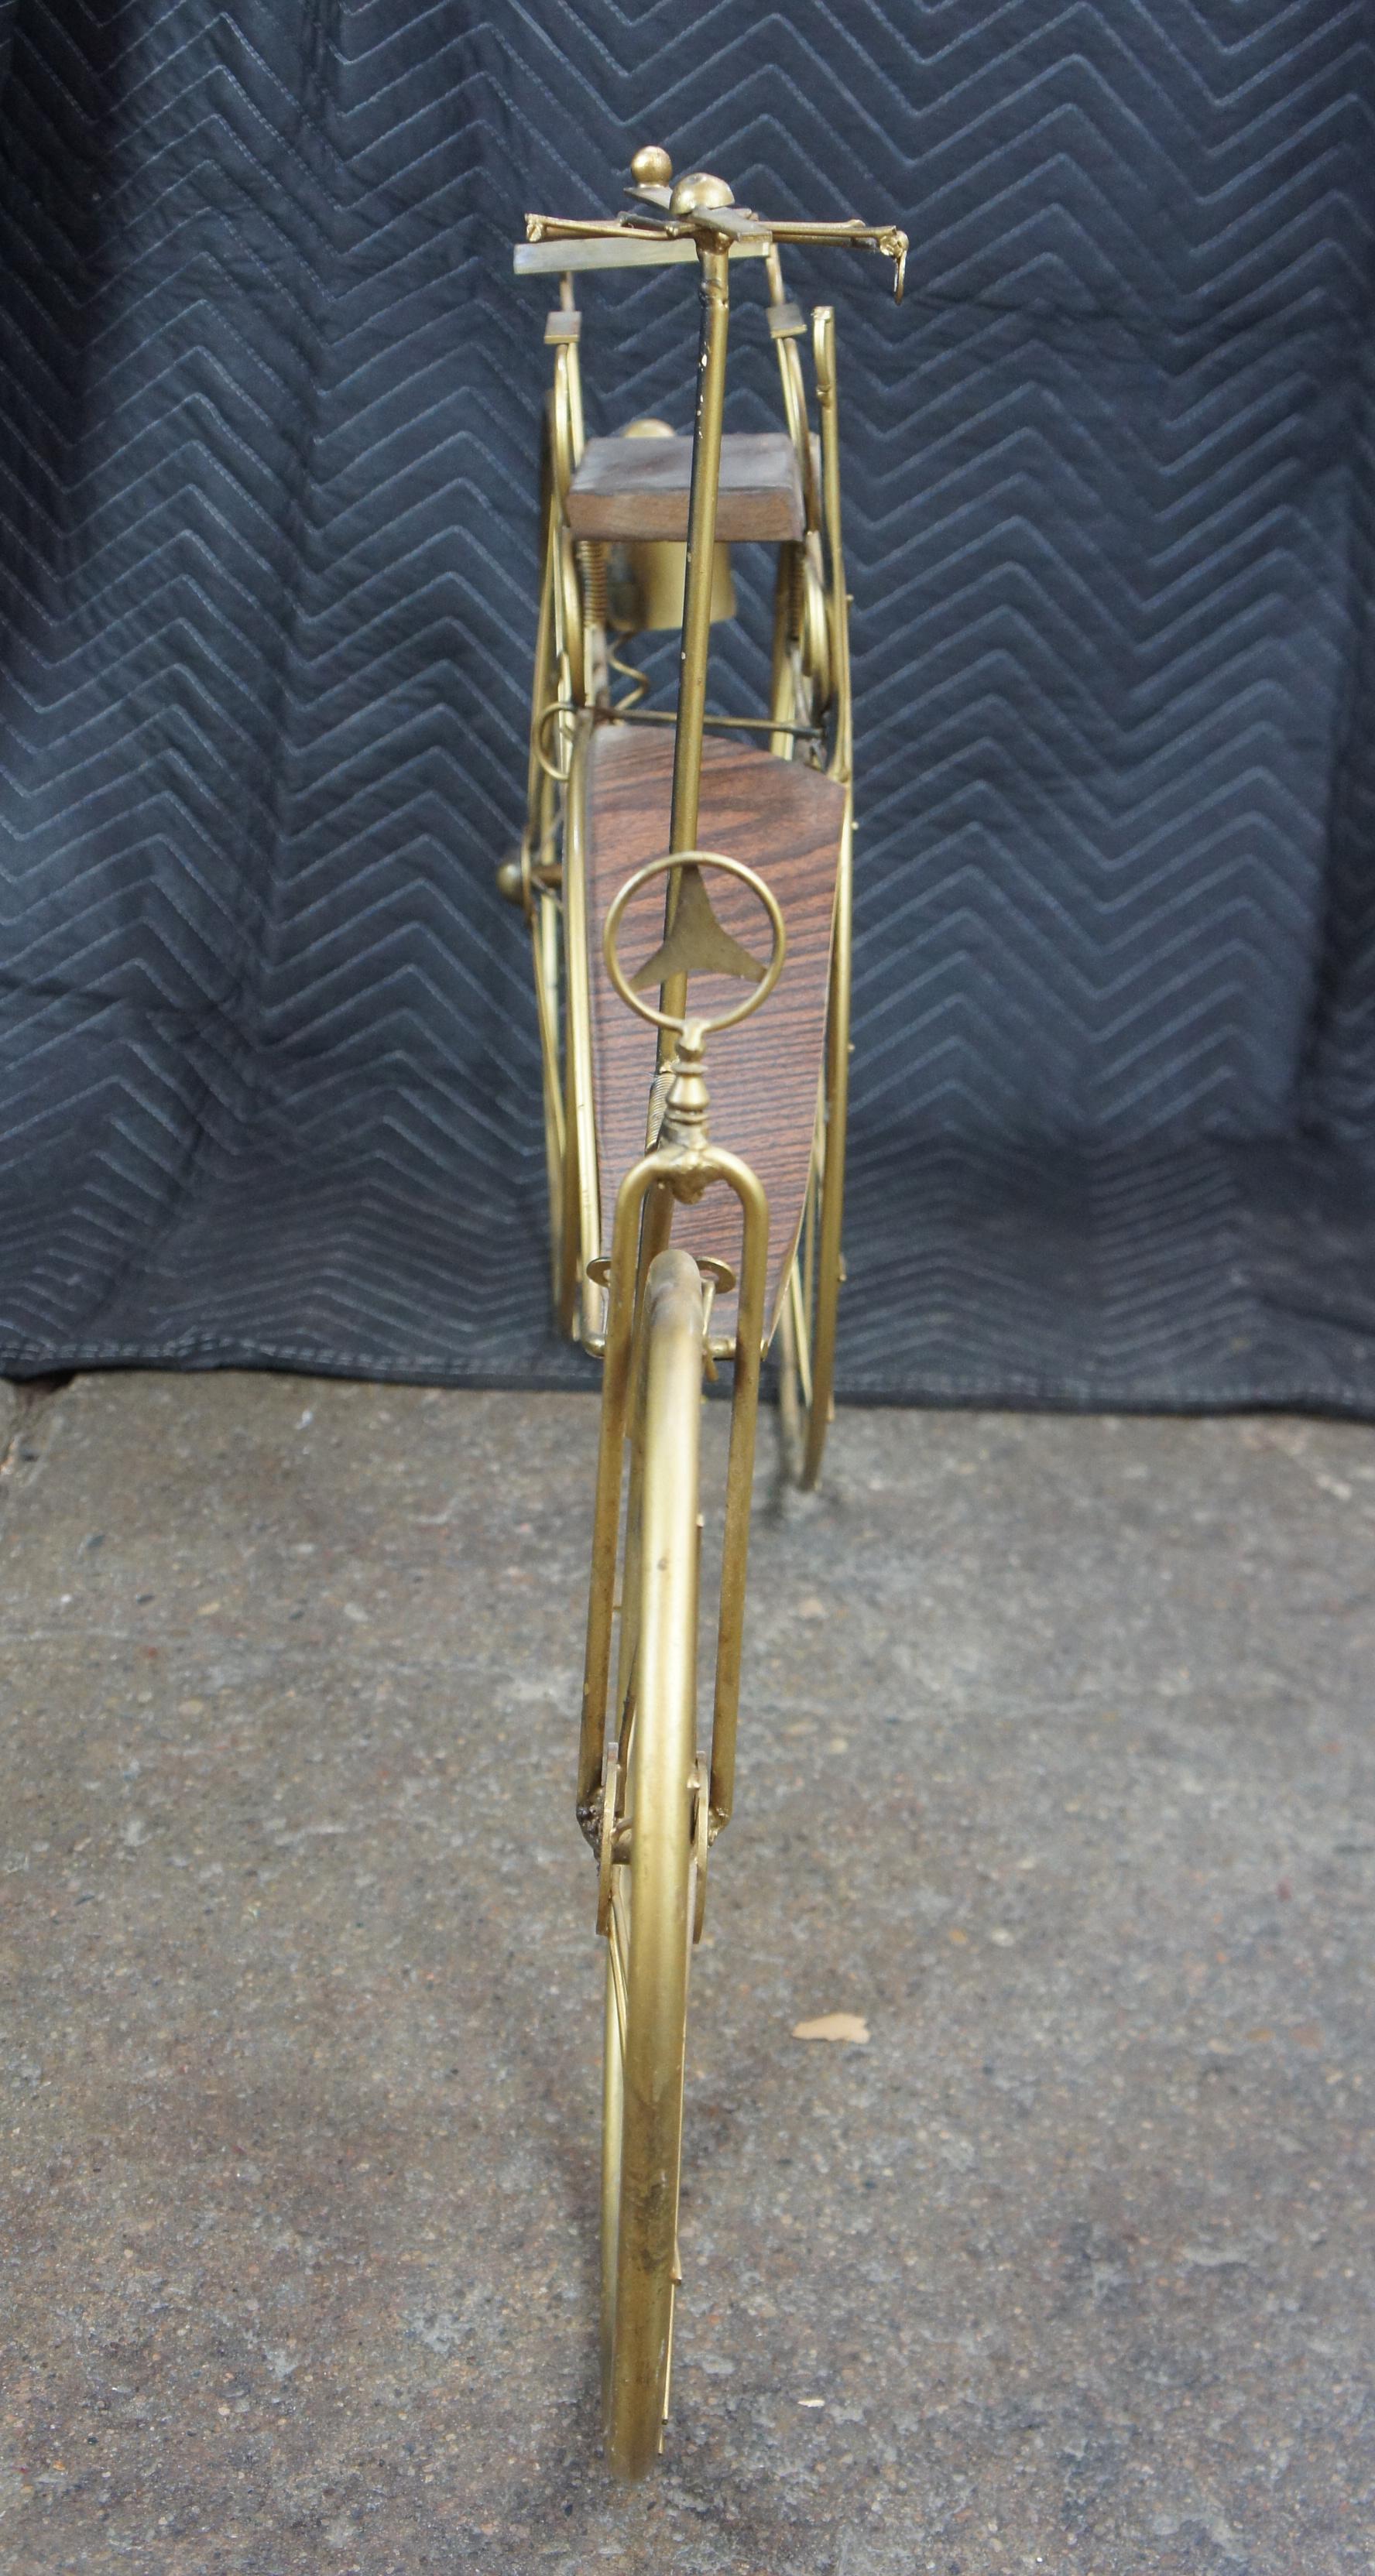 1986 Curtis Jere Karl Benz Mercedes Brass Bicycle Sculpture Mid-Century Modern For Sale 4